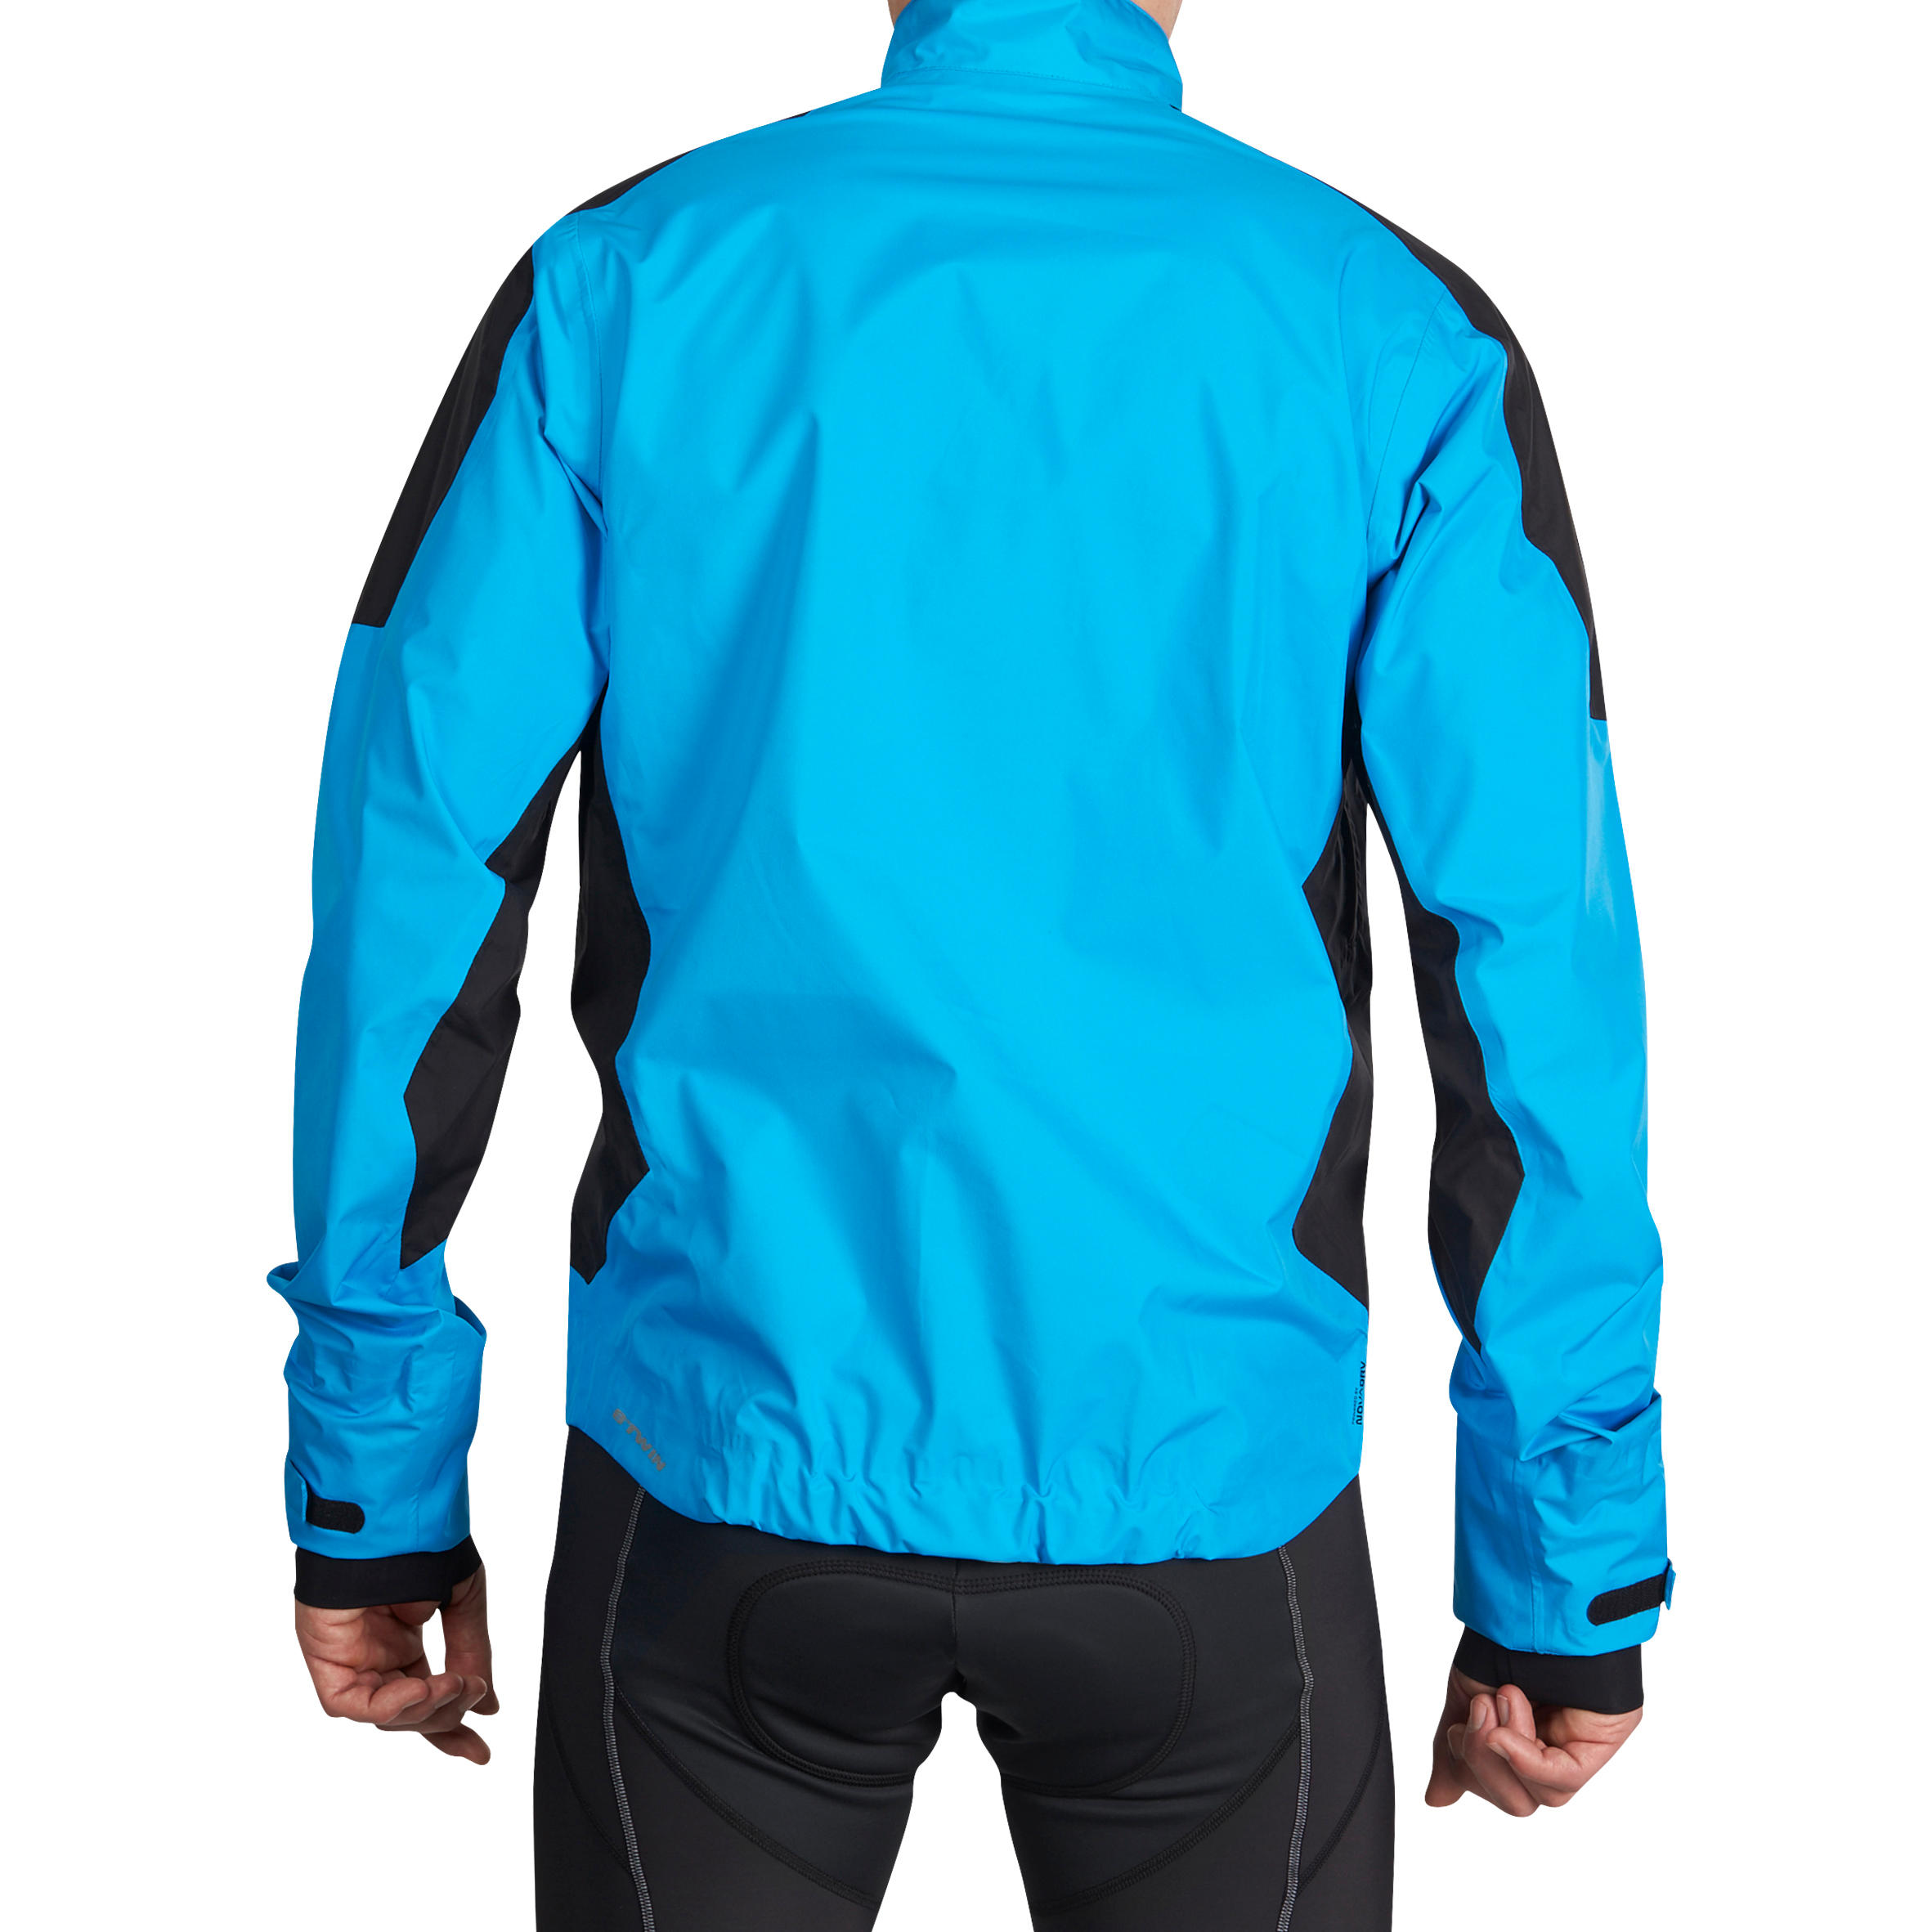 900 Mountain Biking Rainproof Jacket - Blue/Black 4/29